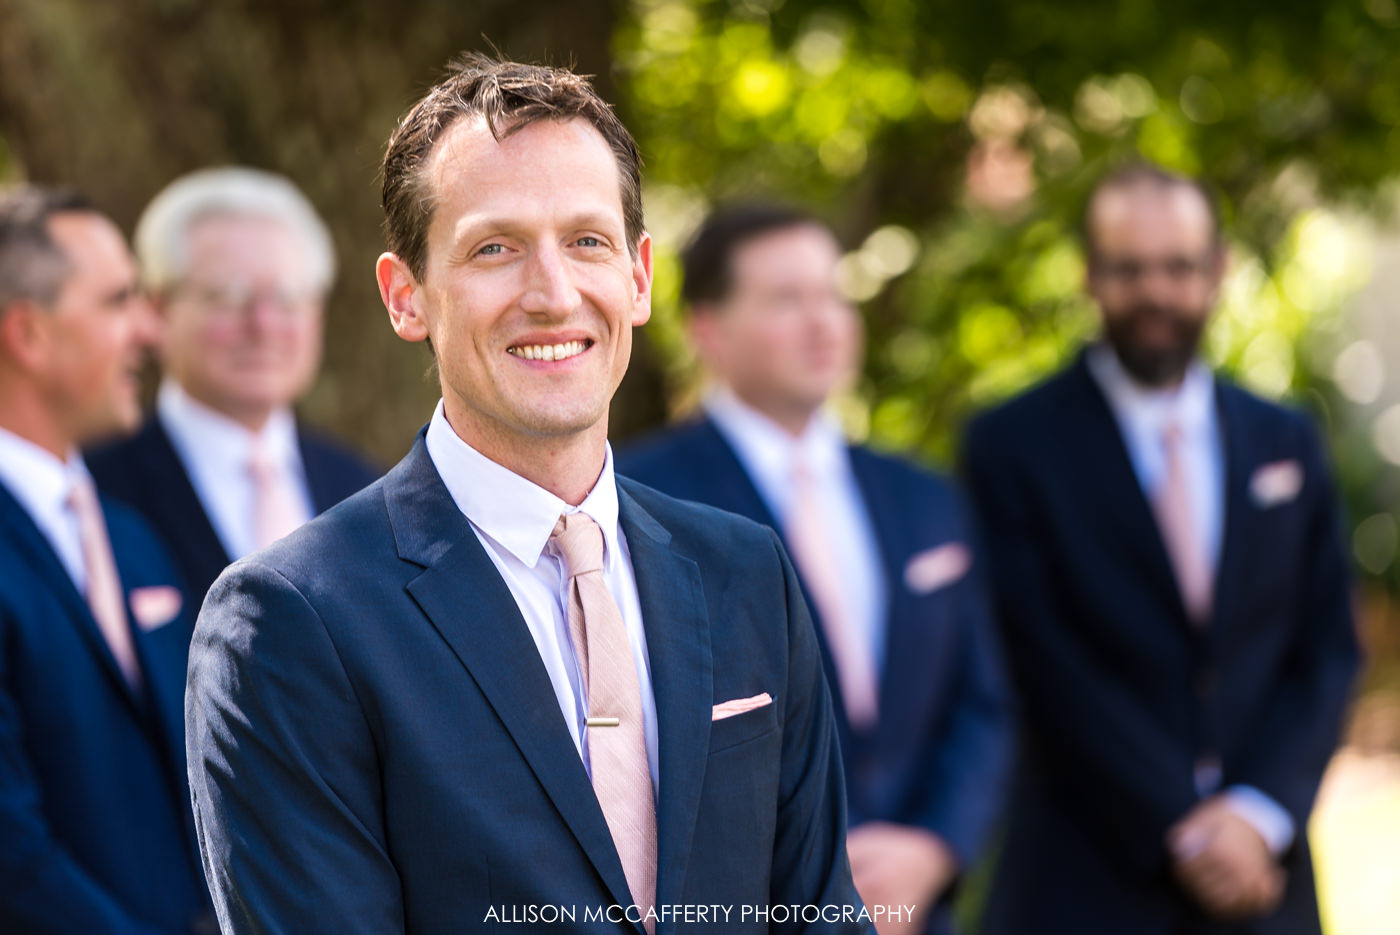 Photo of groom in navy suit and pink tie